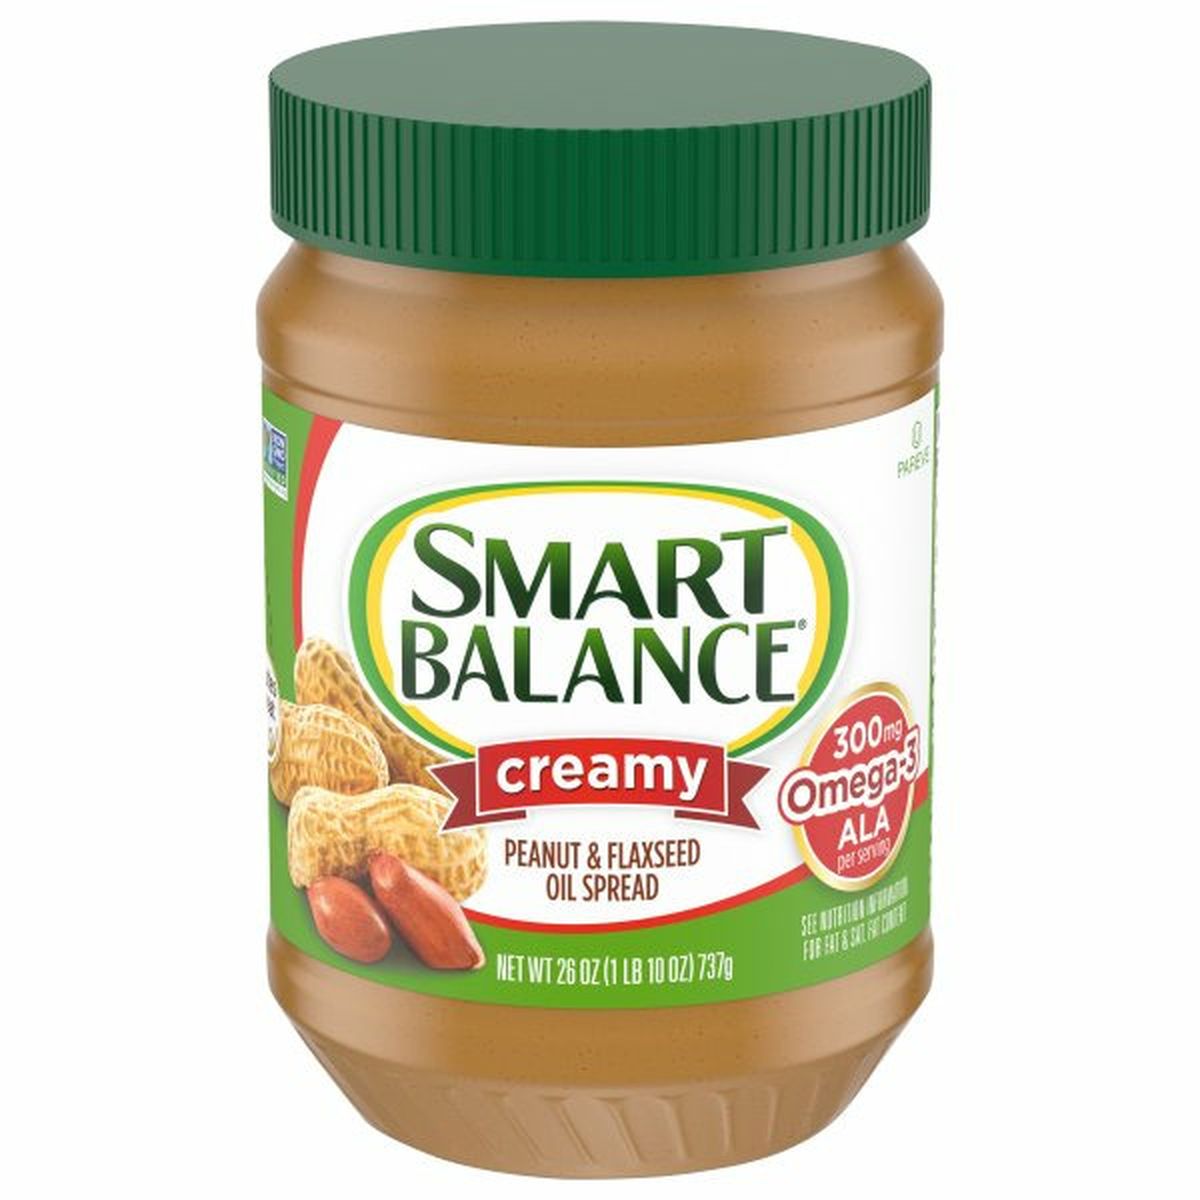 Calories in Smart Balance Peanut & Flaxseed Oil Spread, Creamy